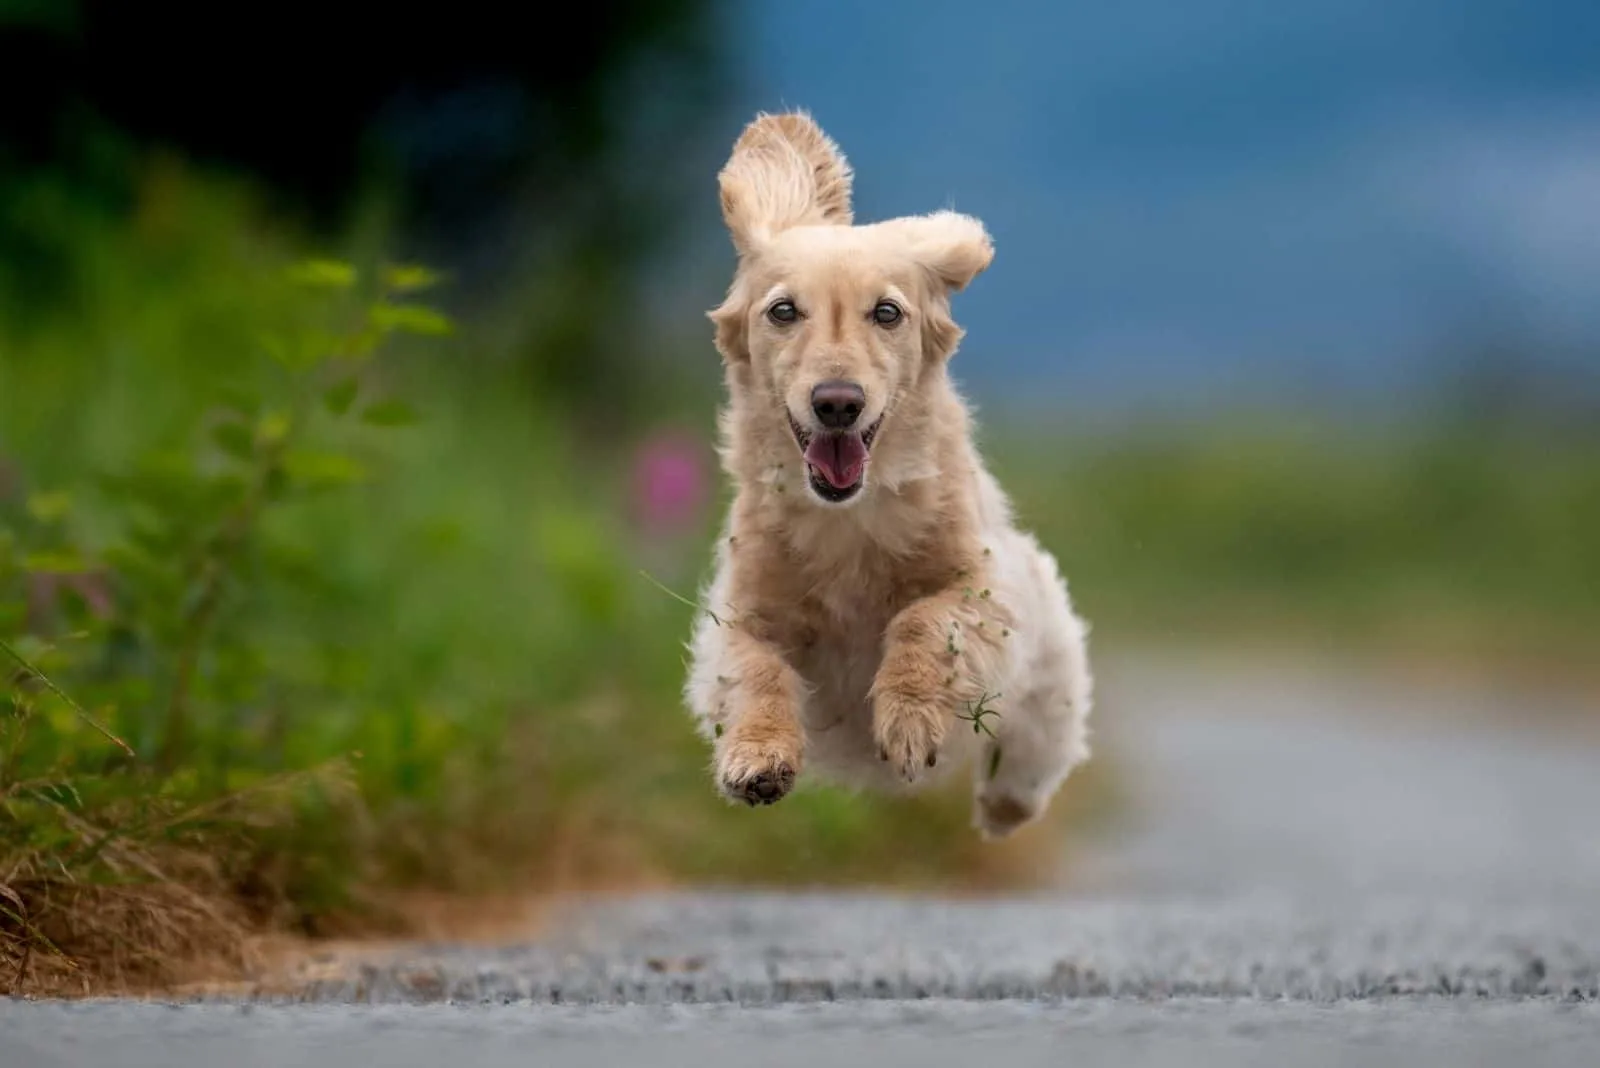 dachshund dog runs with no feet touching the ground